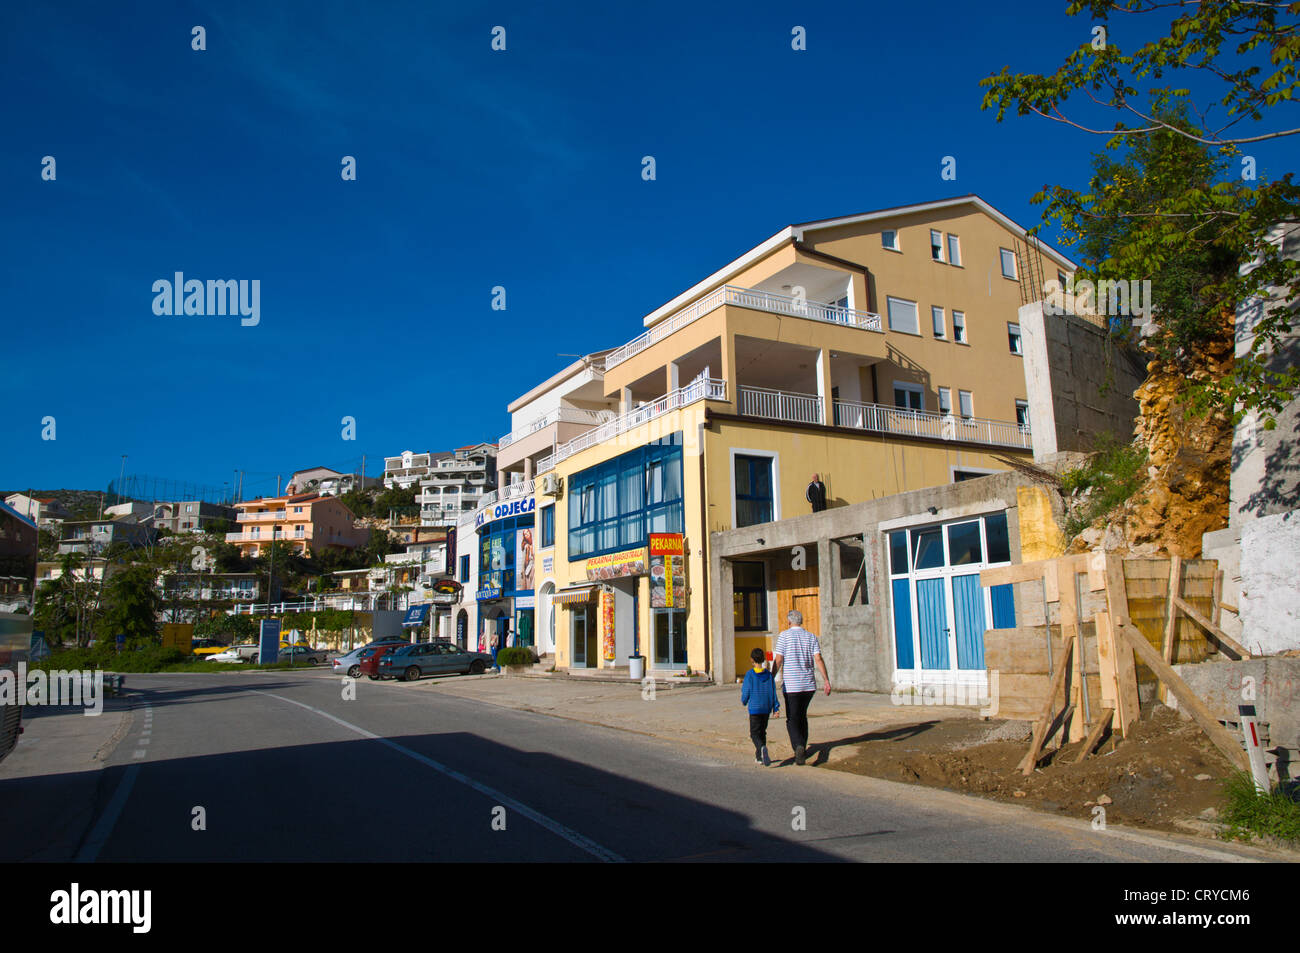 Neum adriatic coast bosnian hi-res stock photography and images - Alamy